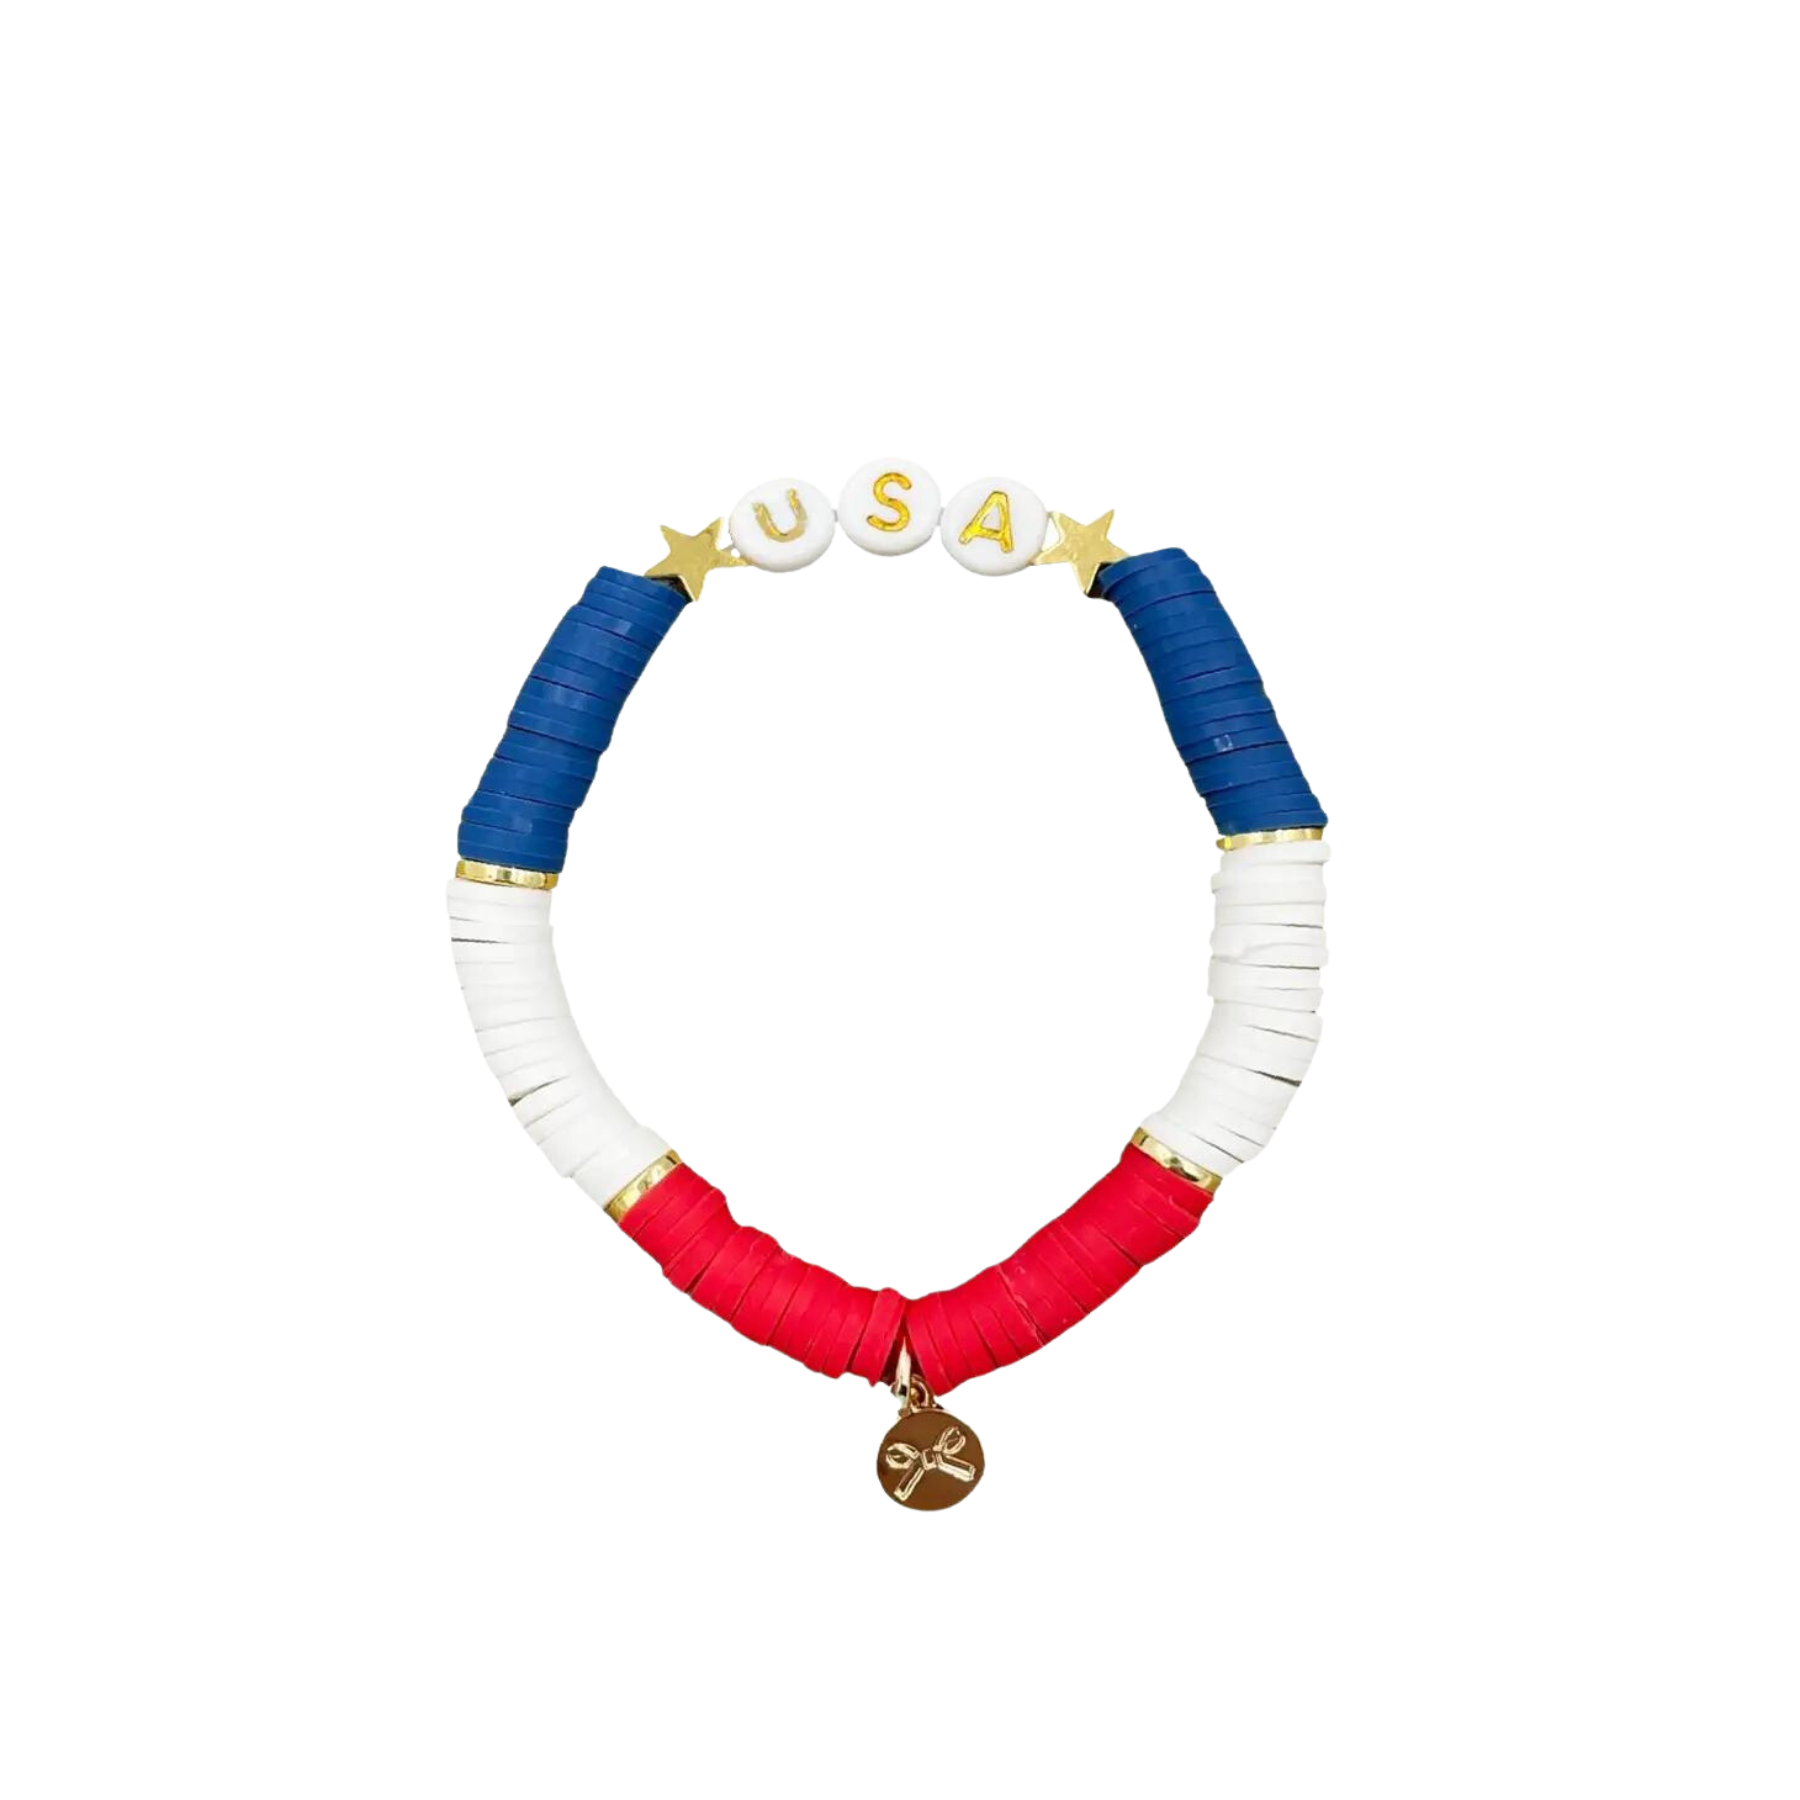 USA Girls Bracelet